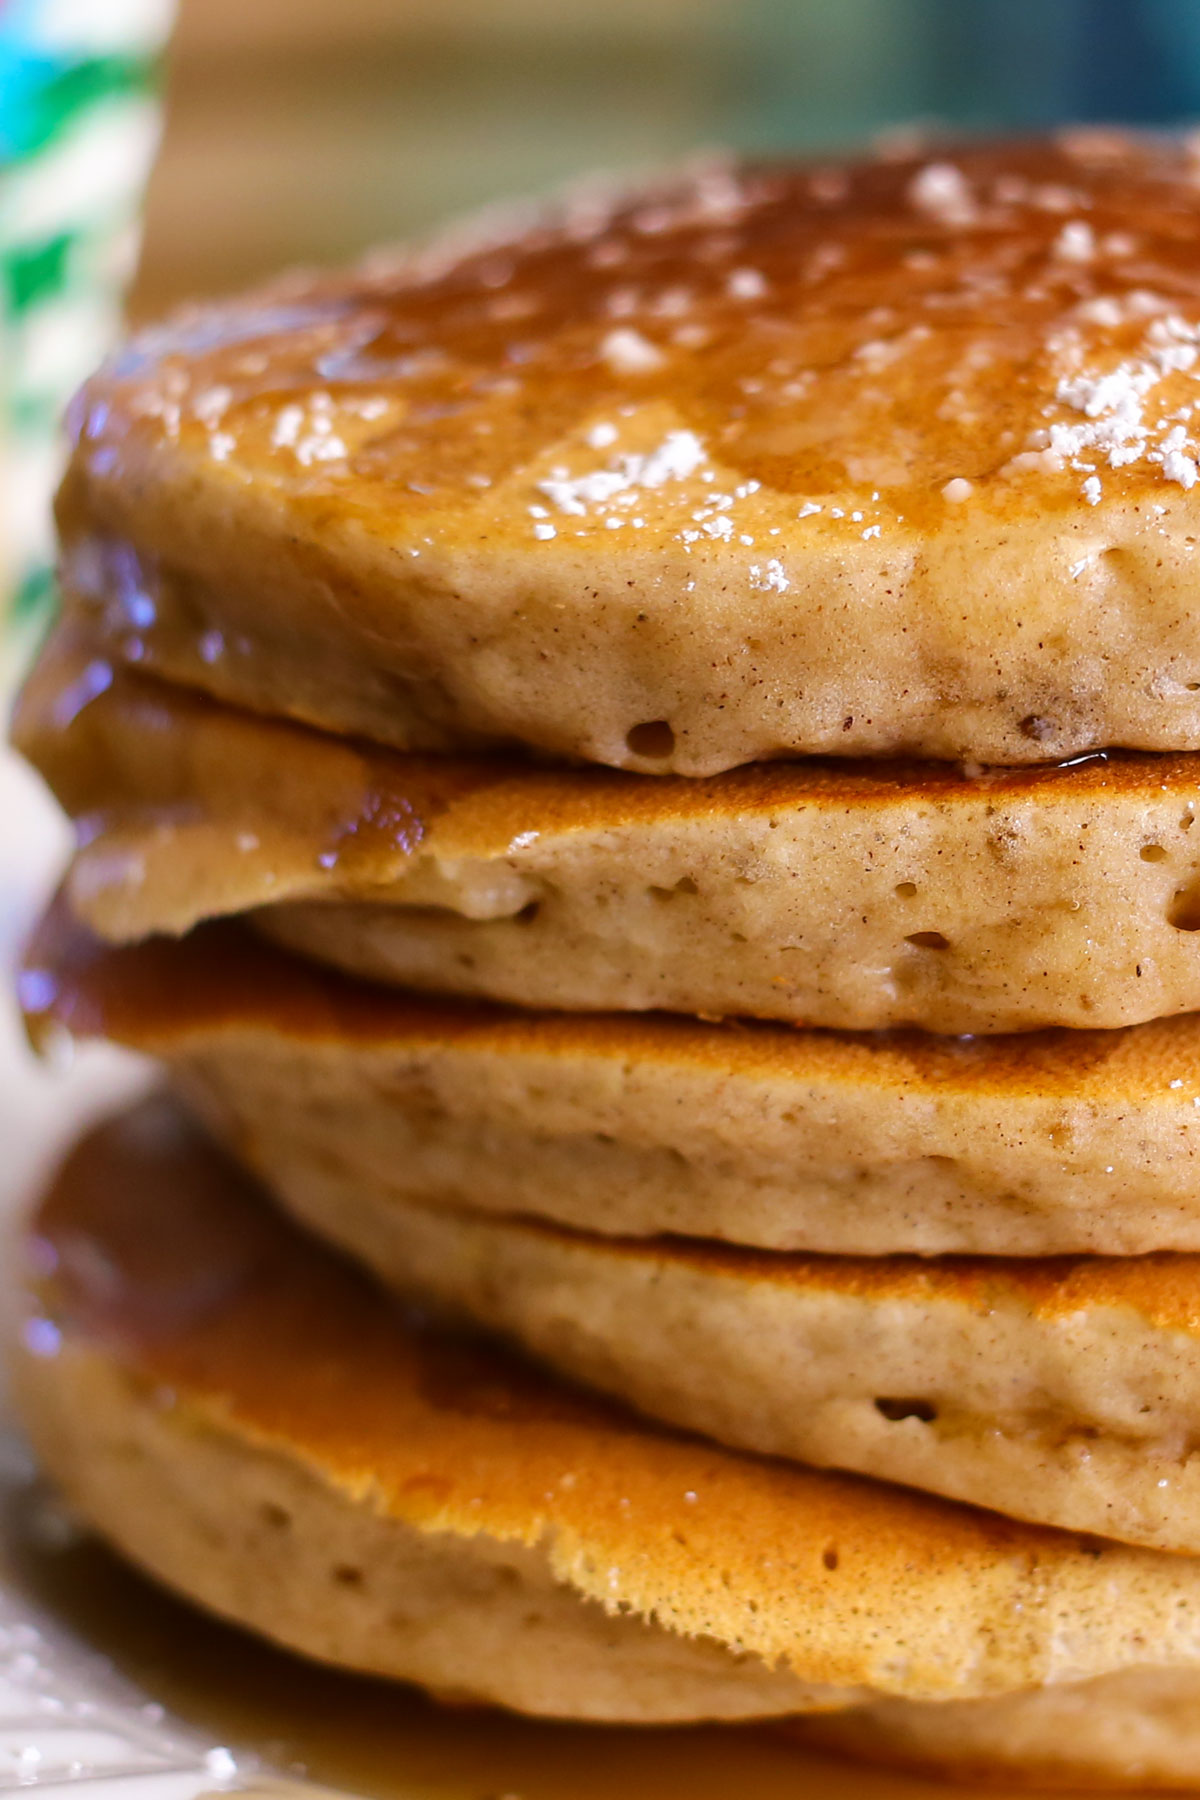 Eggnog Pancakes recipe